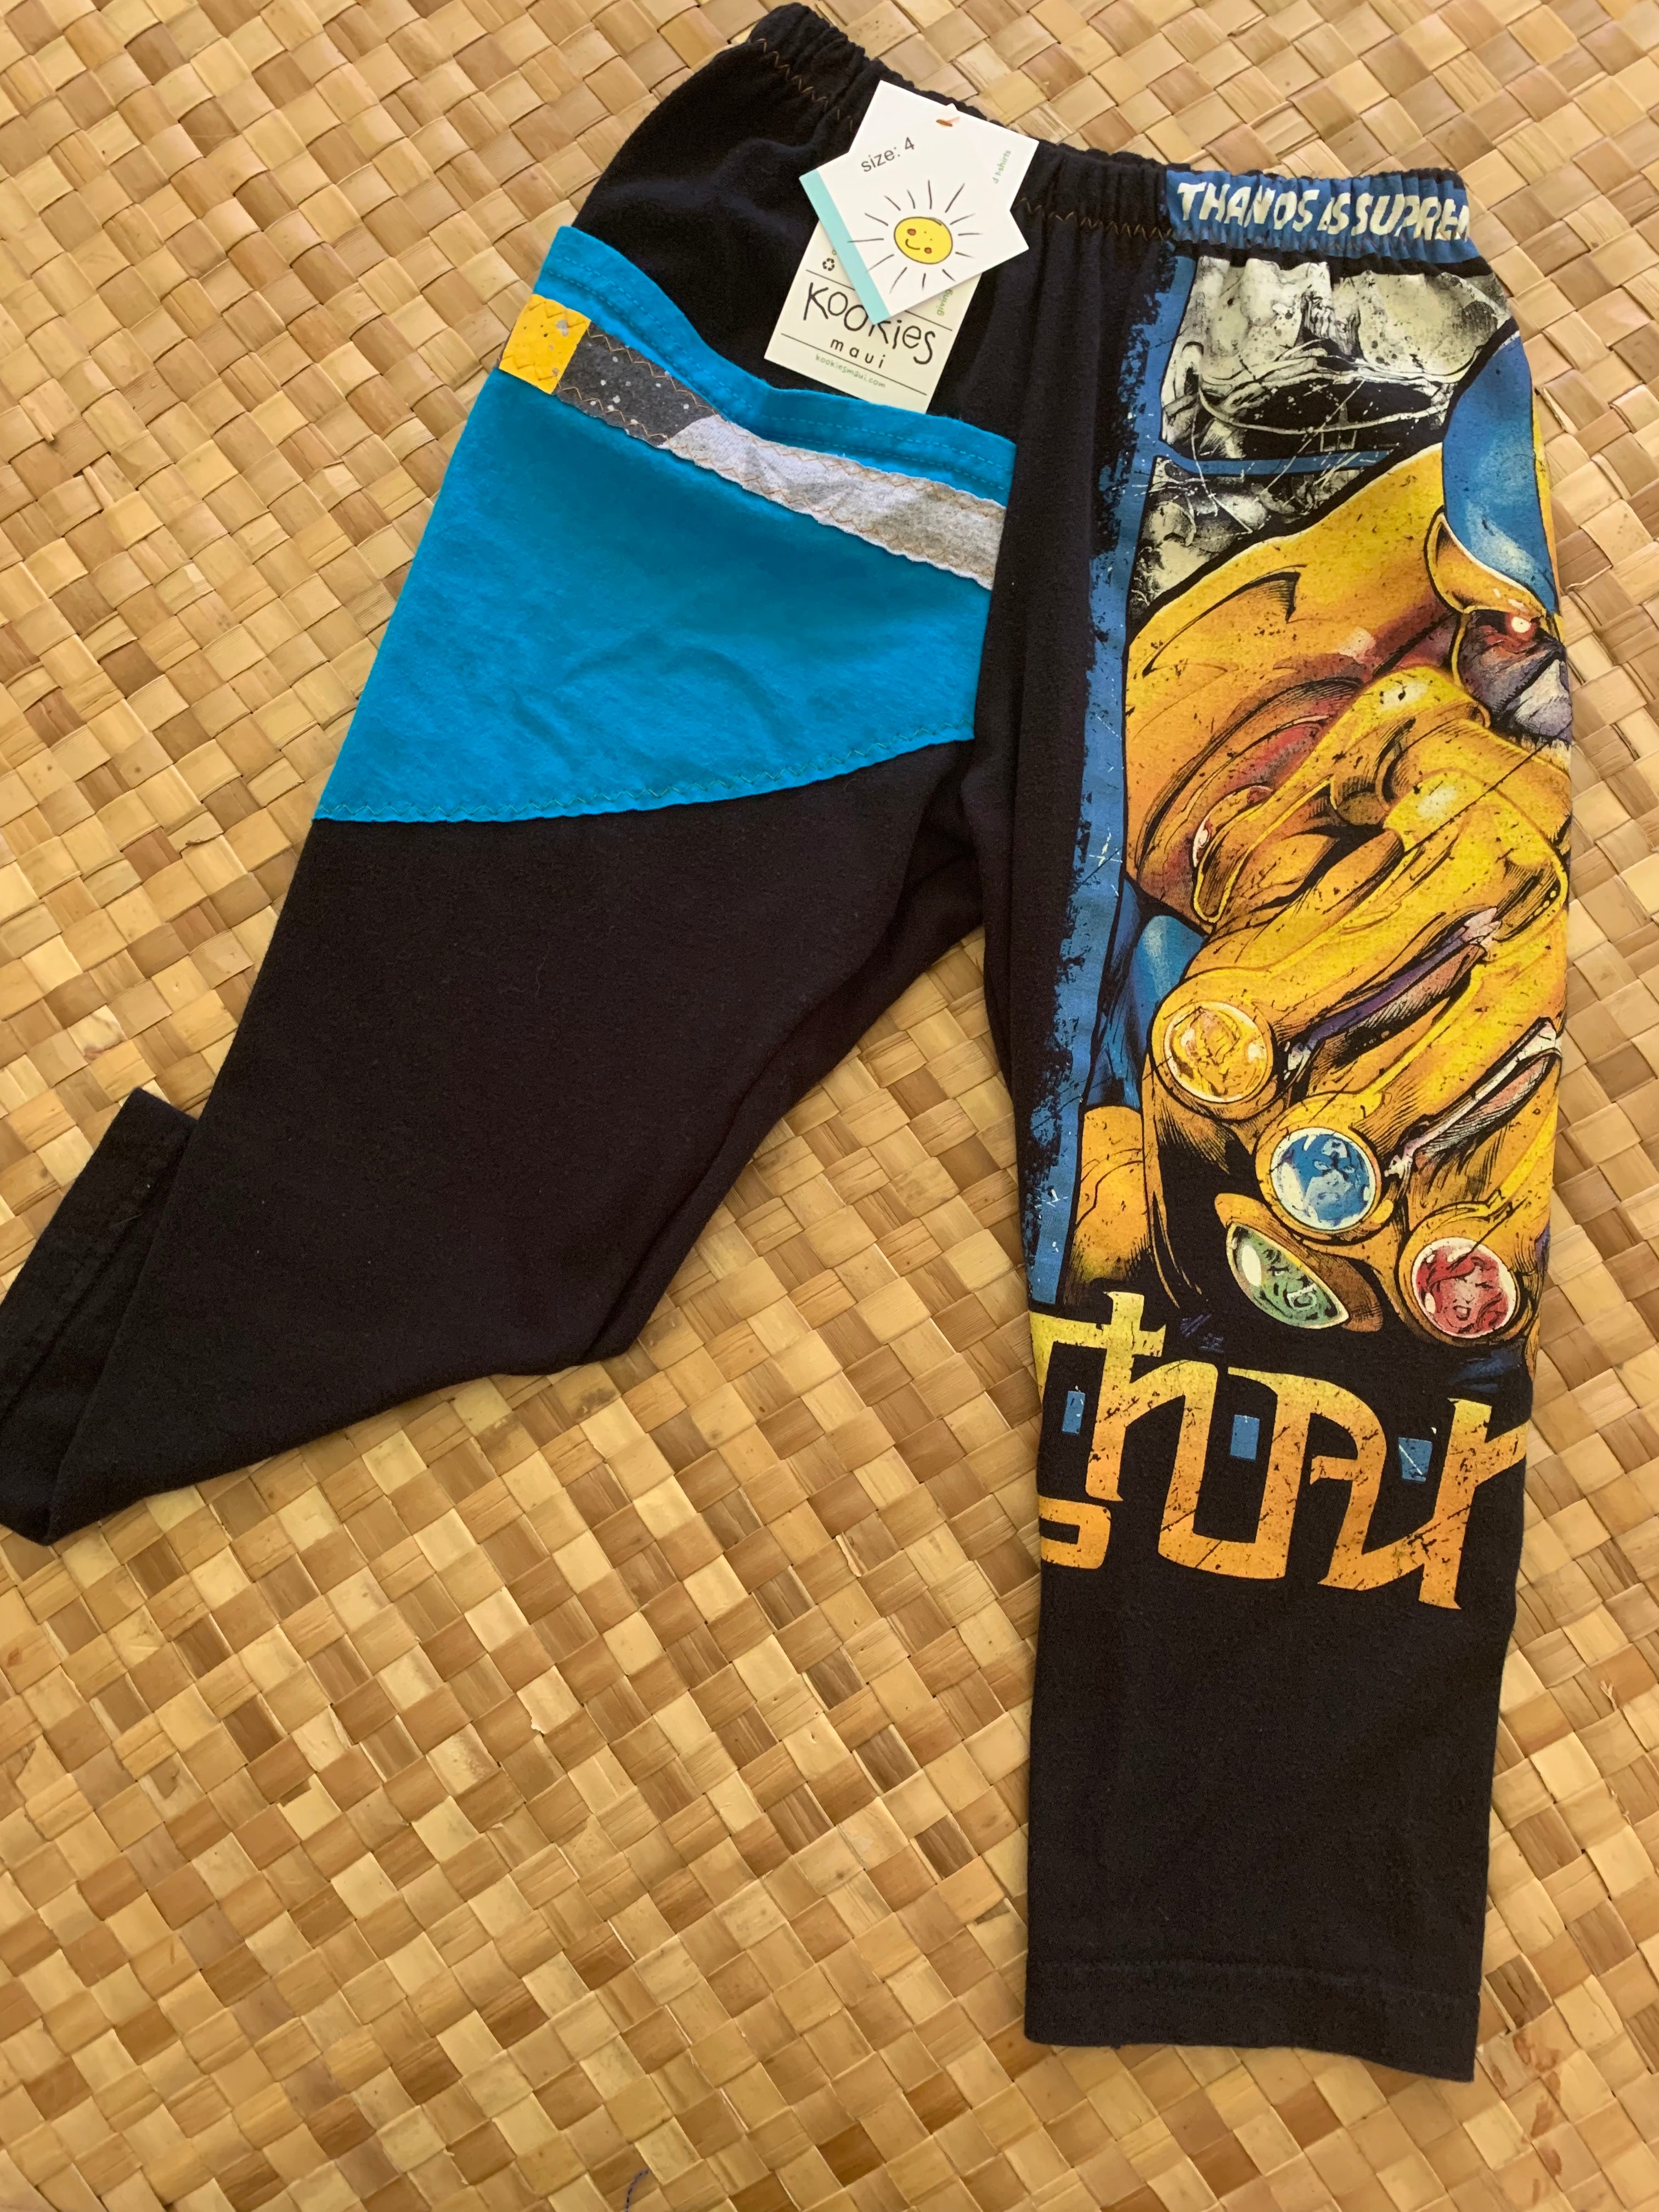 Kids Size 4 "Black & Teal Marvel Thanos" ʻOpihi Picker Pants